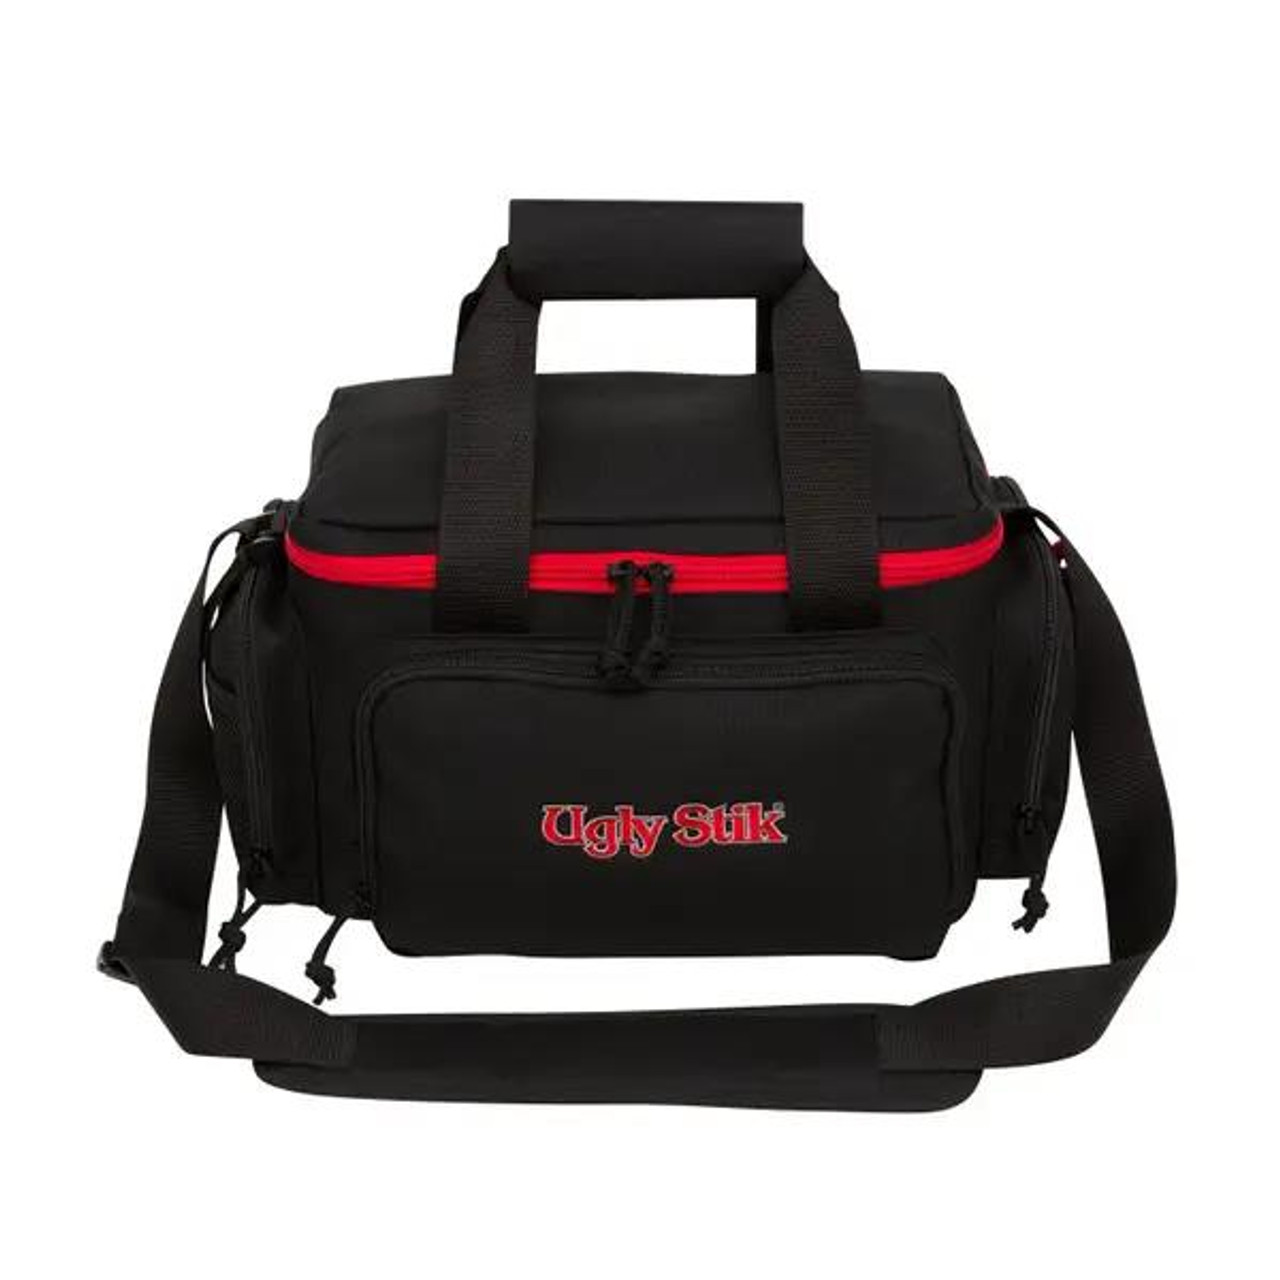 Ugly Stik Medium Tackle Bag - 2 Boxes - Dance's Sporting Goods